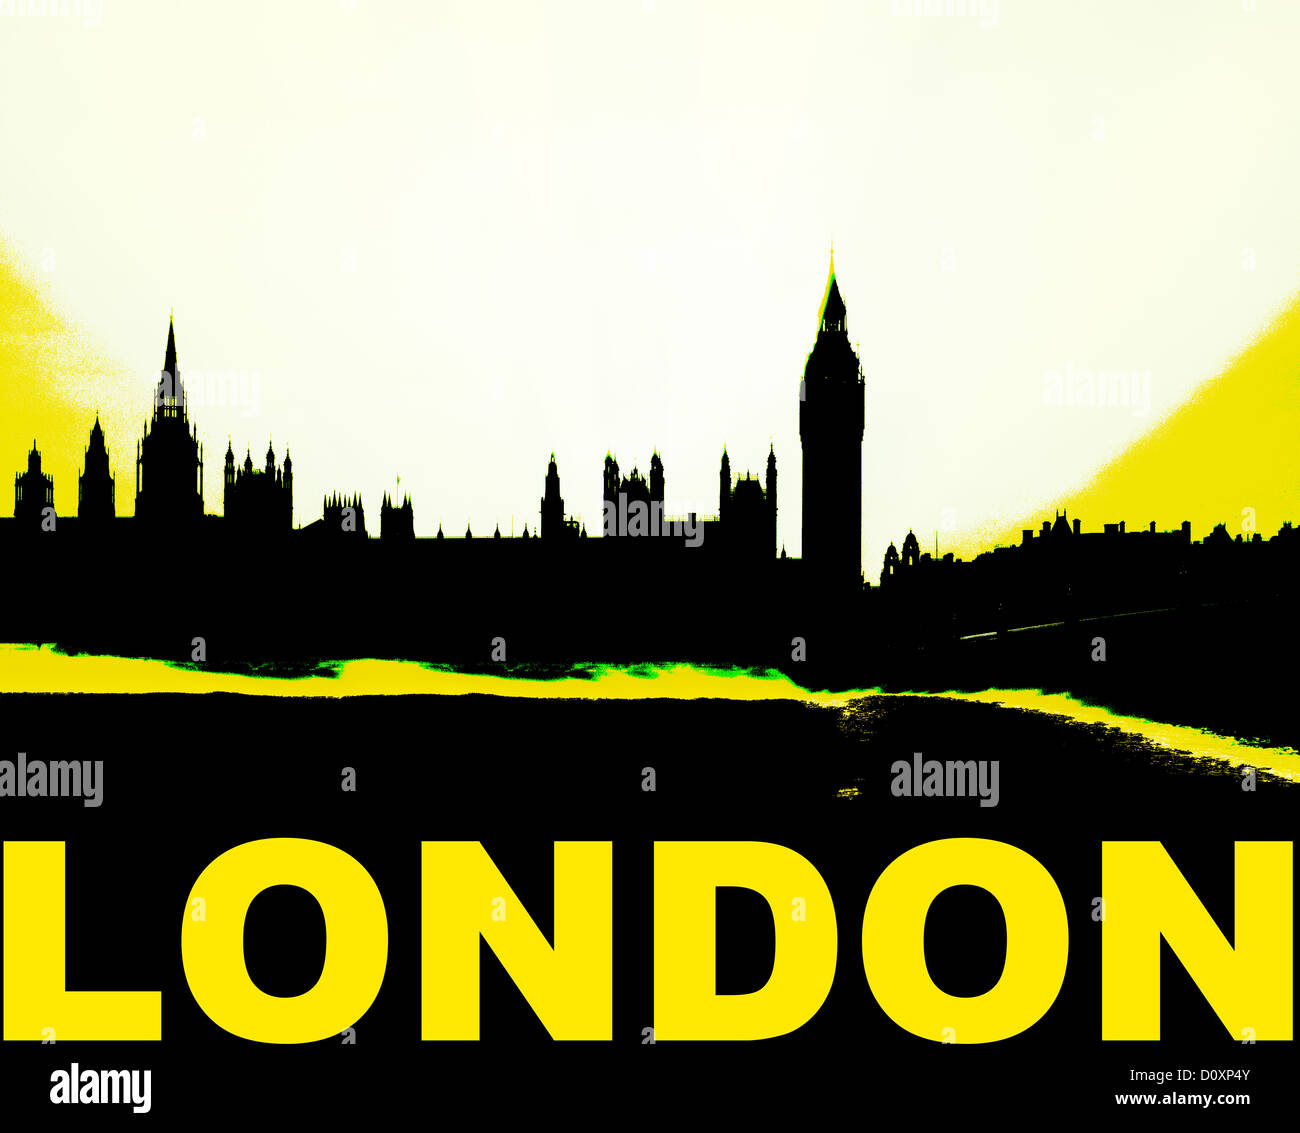 GB - LONDON: London Graphic Design Stock Photo